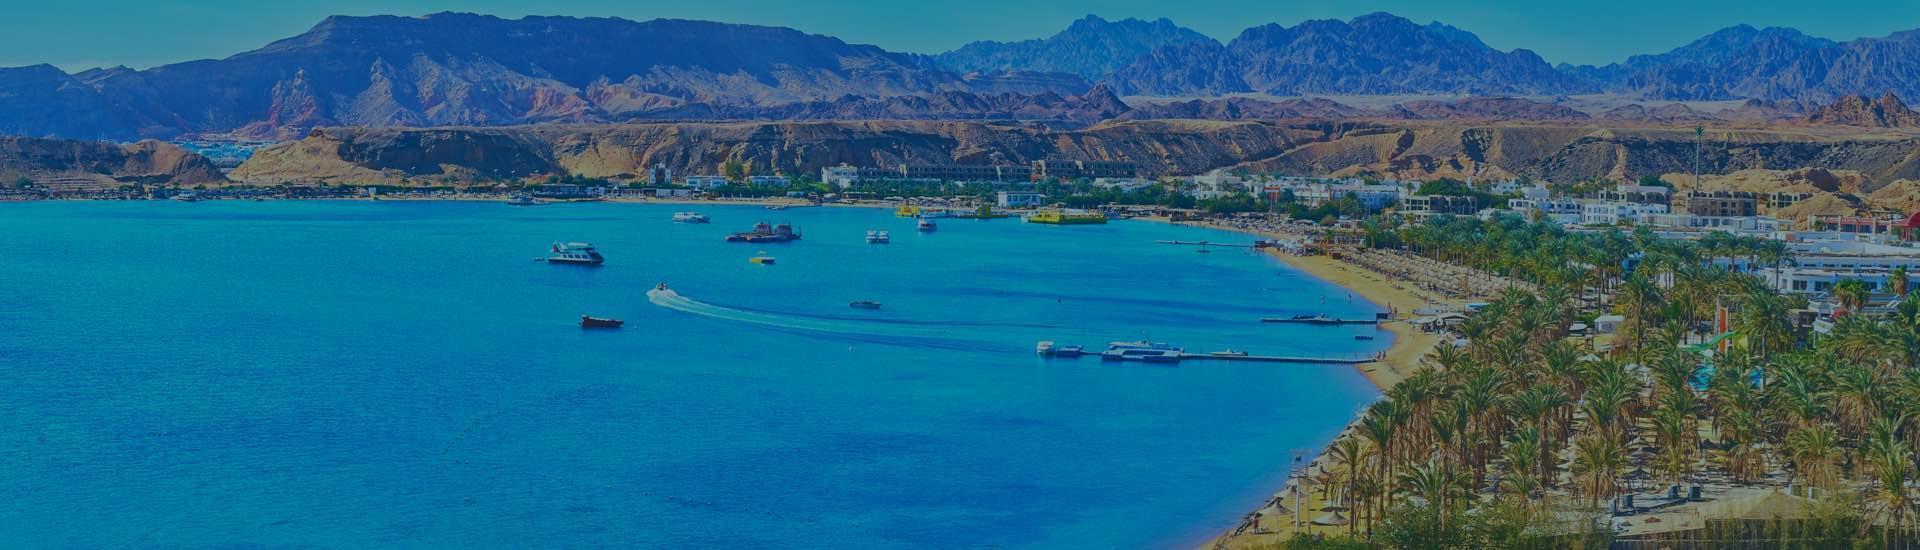 Book Mafraq to Sharm El Sheikh Flights